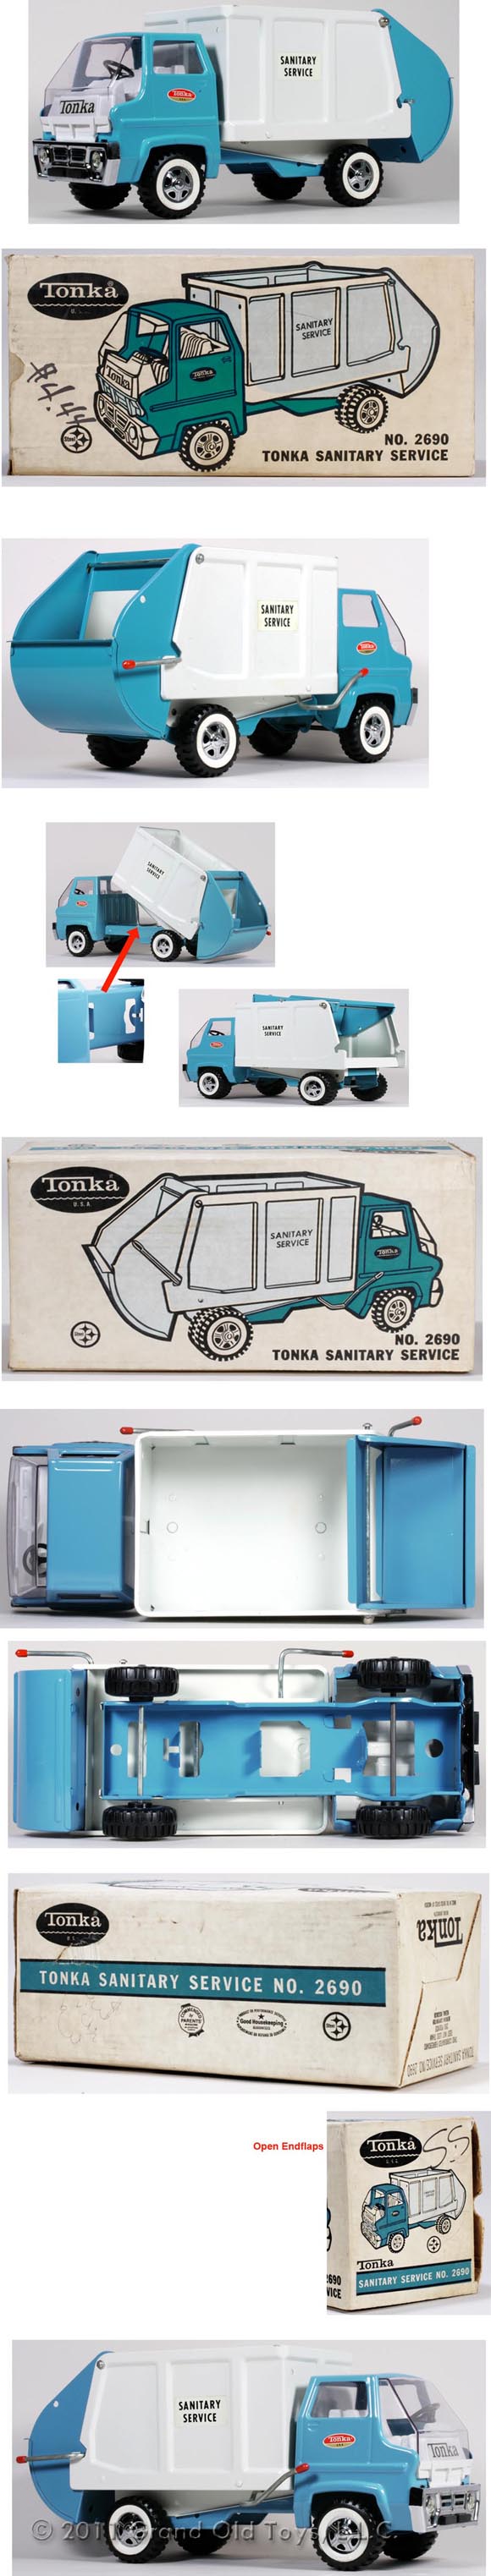 1971 Tonka No. 2690 Sanitary Service Truck In Original Box